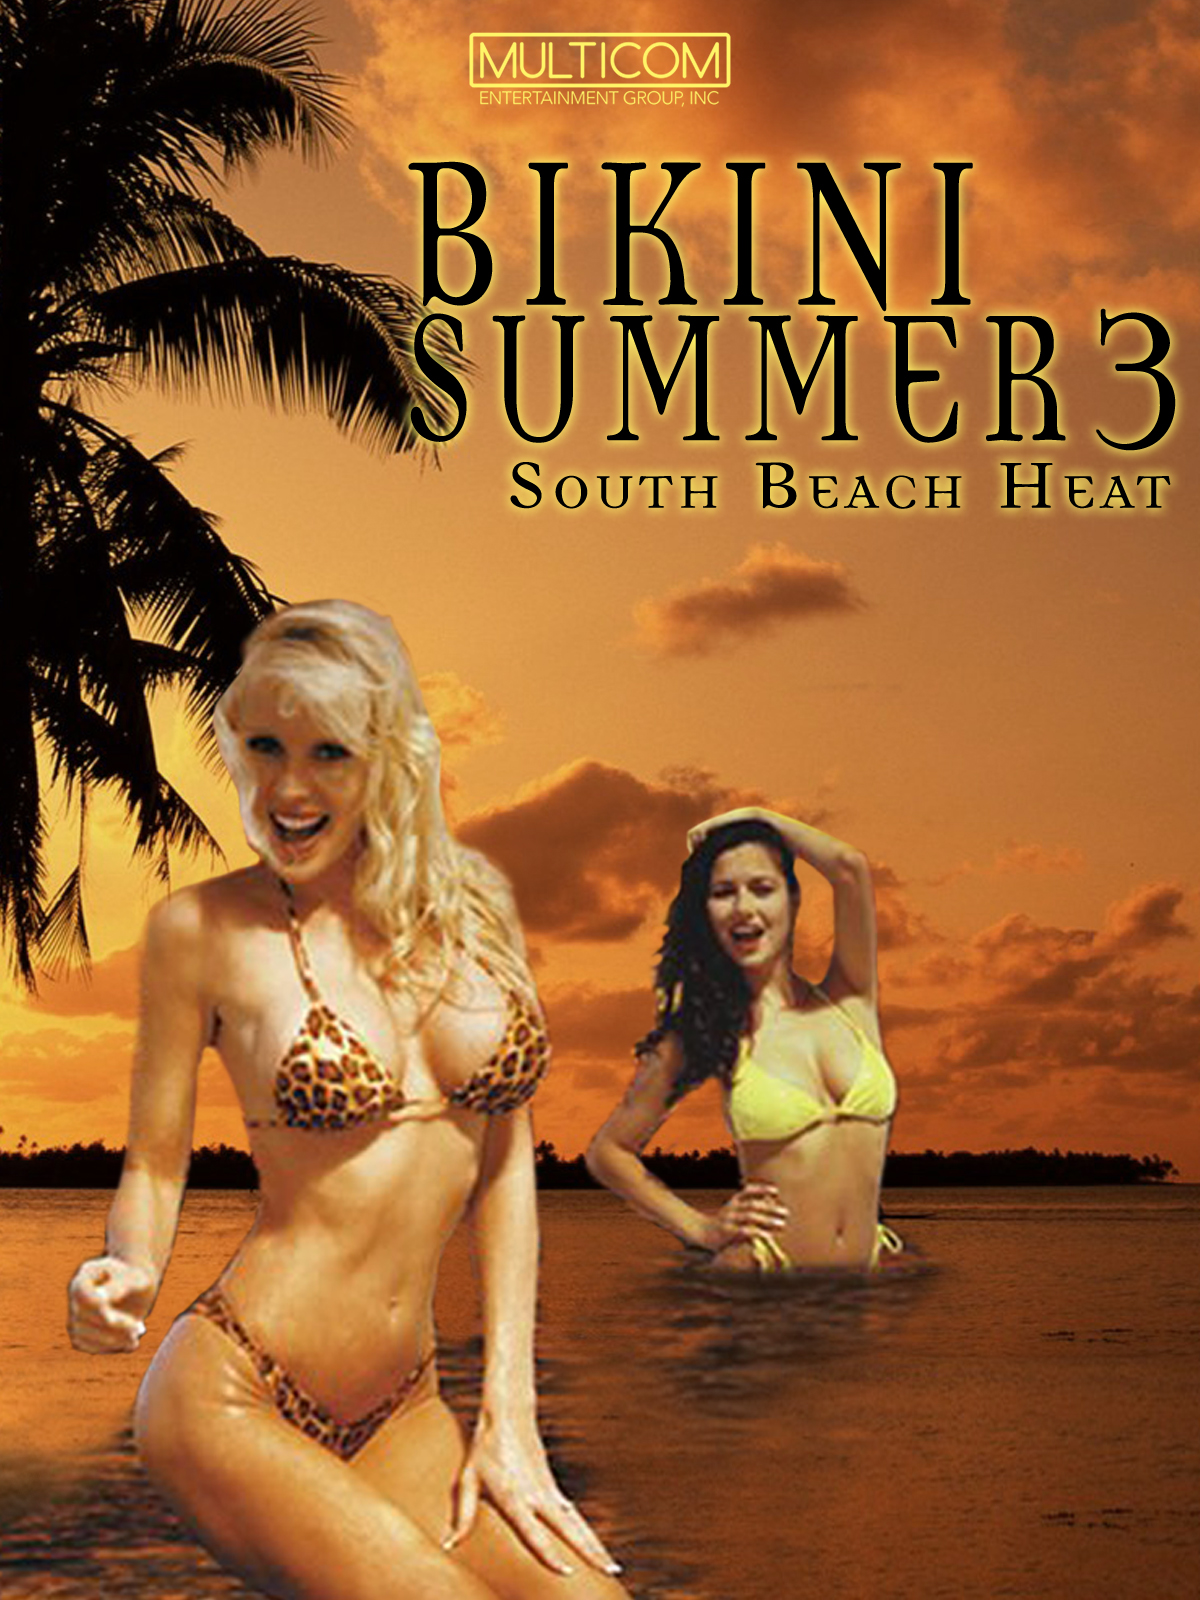 Bikini Summer III: South Beach Heat (1997) starring Heather Elizabeth Parkhurst on DVD on DVD